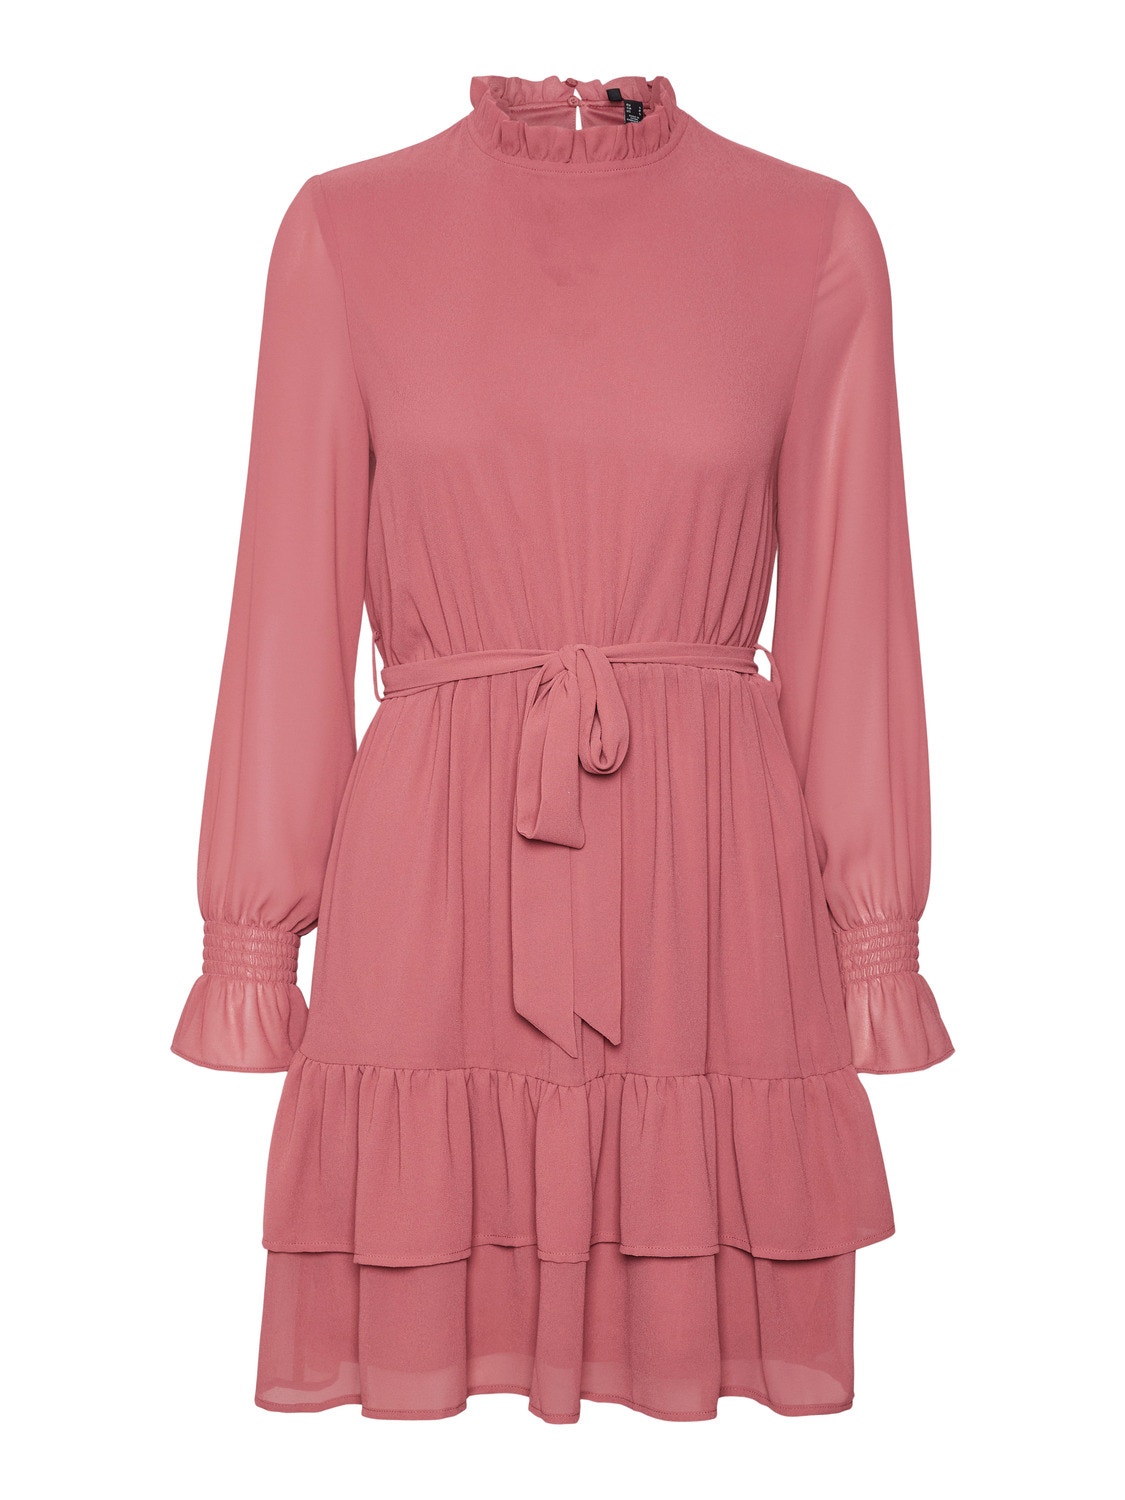 Vero Moda VMANNI Krótka sukienka -Dry Rose - 10293319